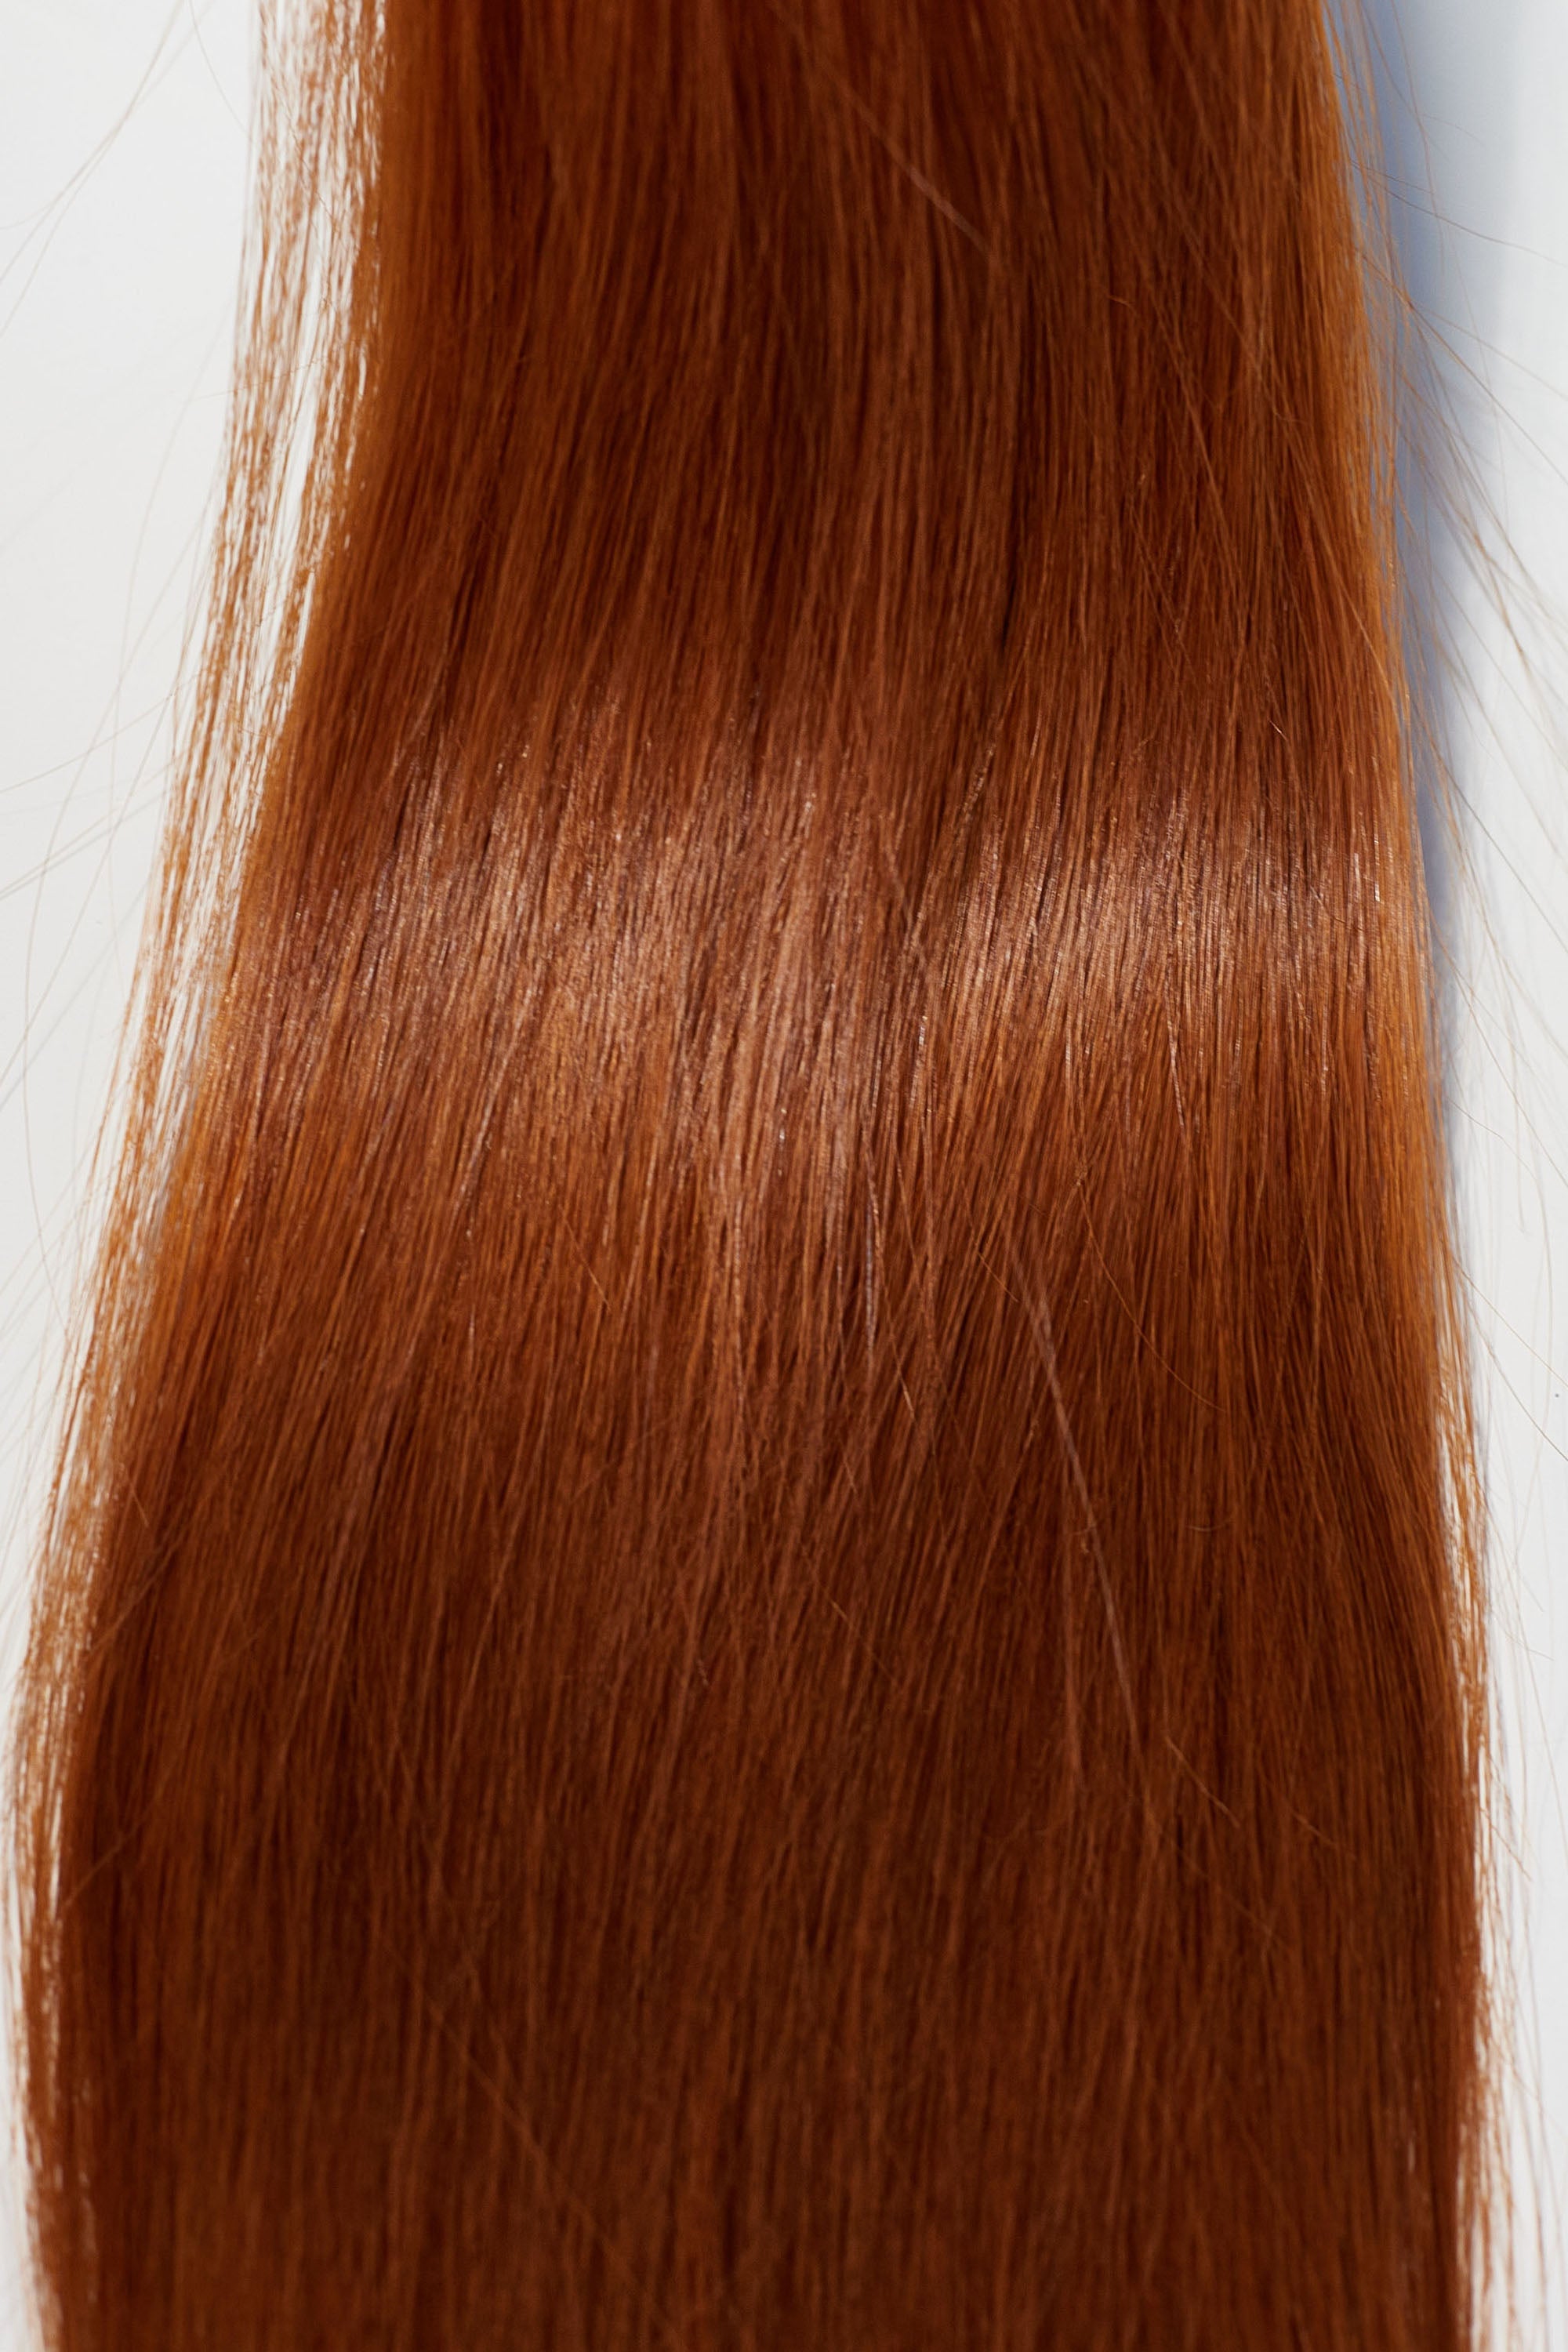 Behair professional Keratin Tip "Premium" 16" (40cm) Natural Straight Brilliant Copper #130 - 25g (Standart - 0.7g each pcs) hair extensions